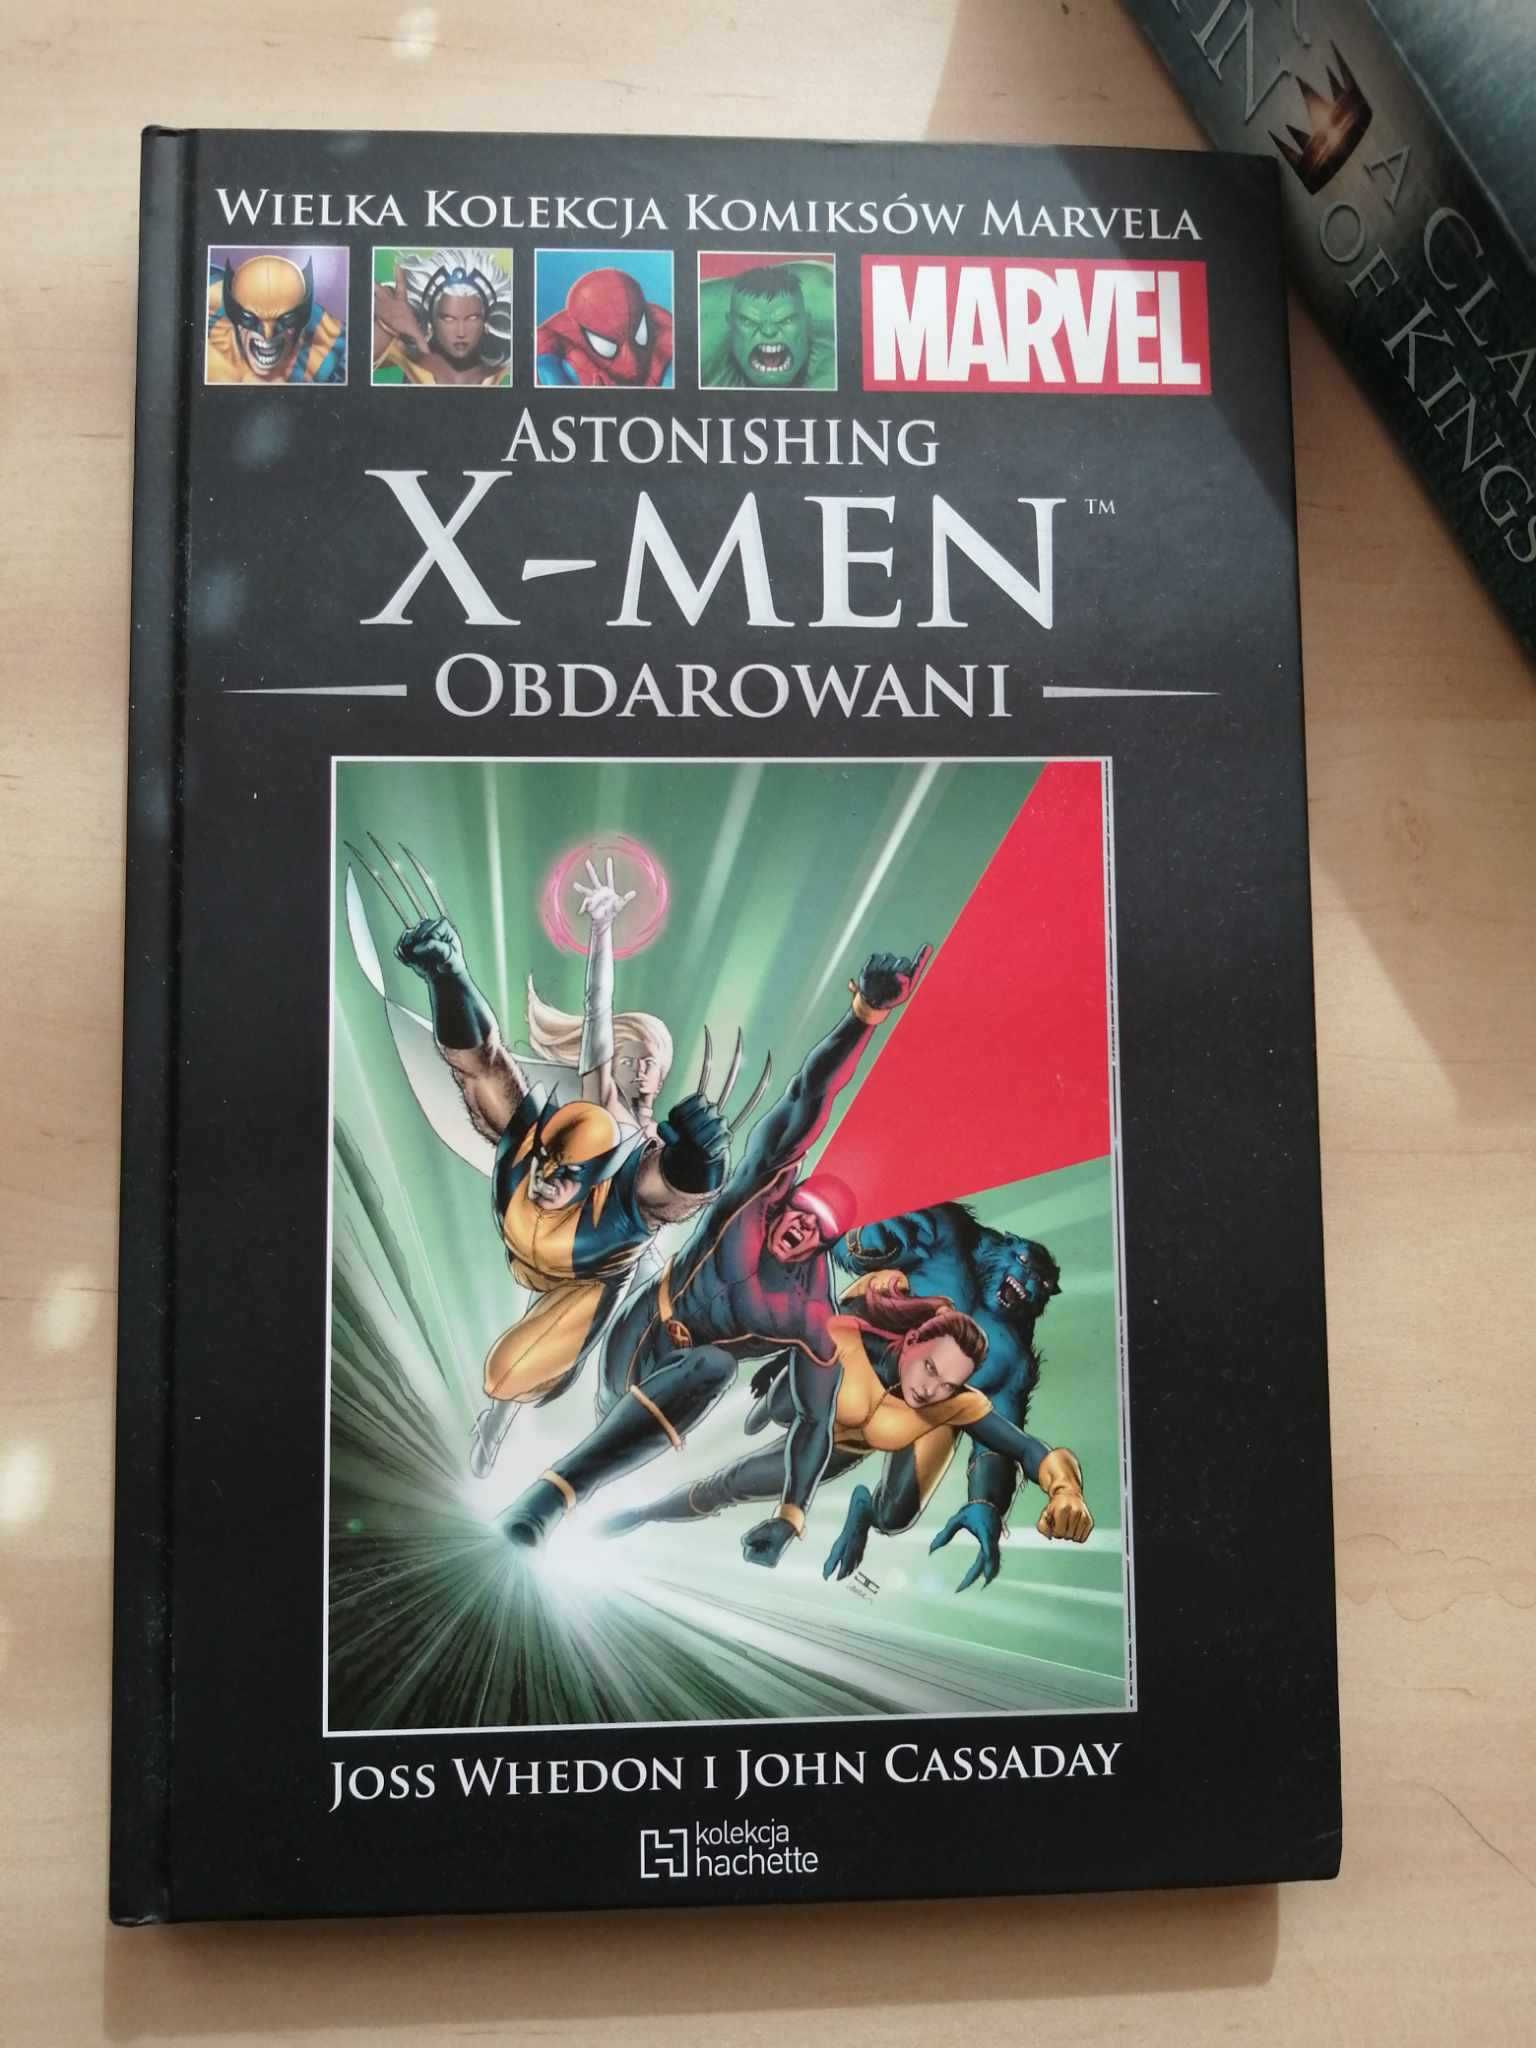 Wielka kolekcja komiksów marvela #2 Astonishing X-Men Obdarowani WKKM